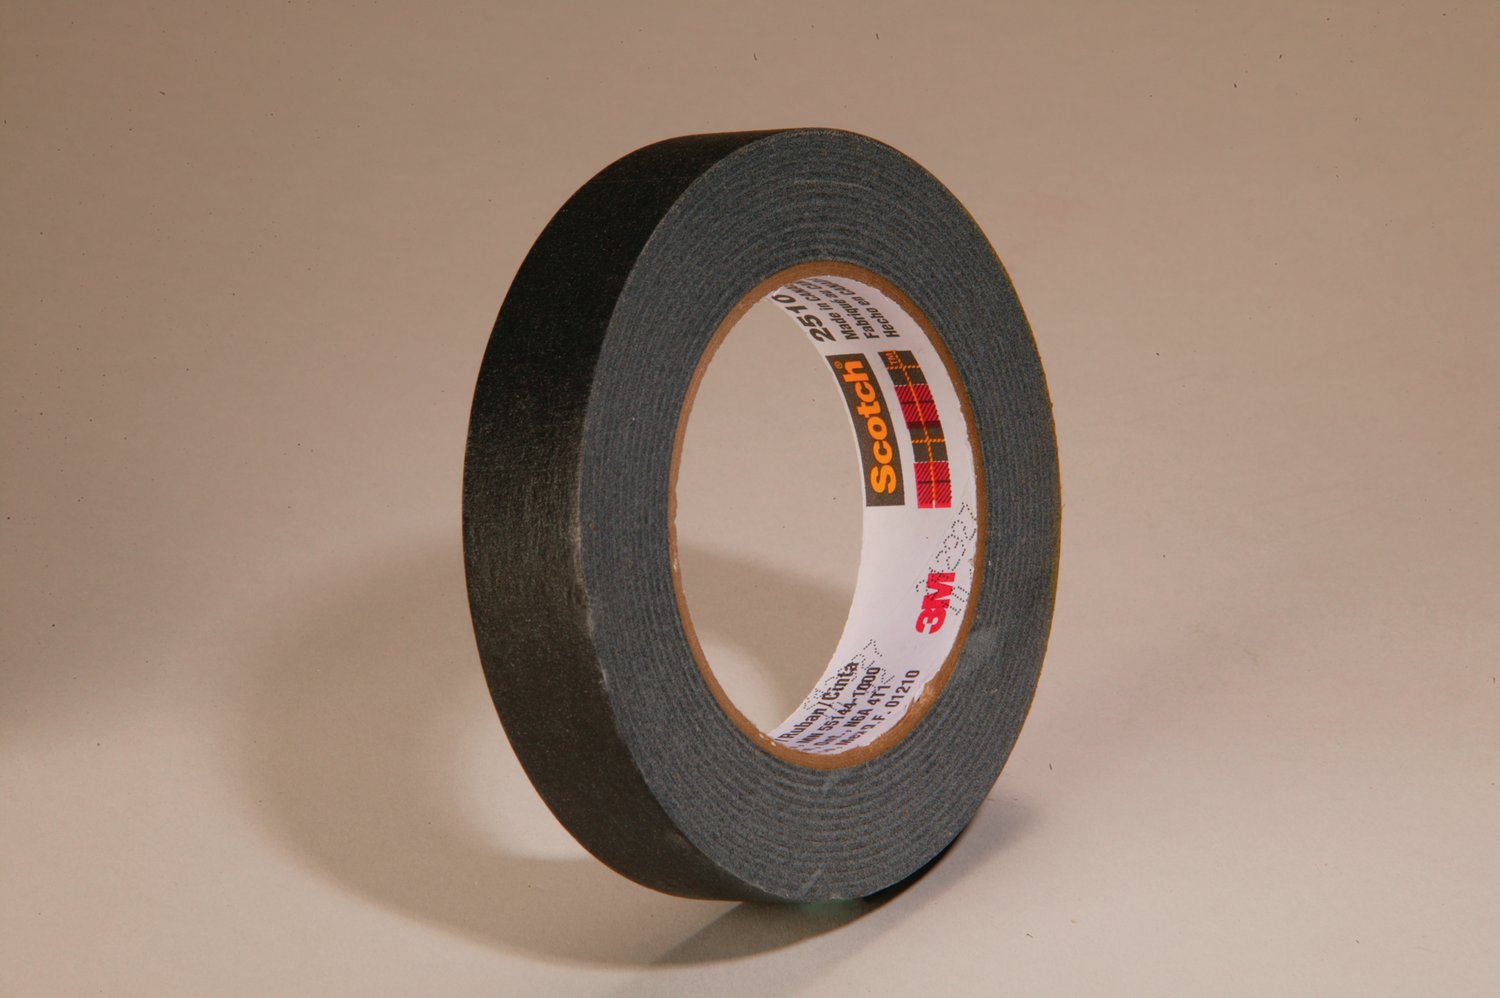 7000124003 - 3M Sealer Tape 2510, Black, 18 mm x 55 m, 5.6 mil, 48 Roll/Case